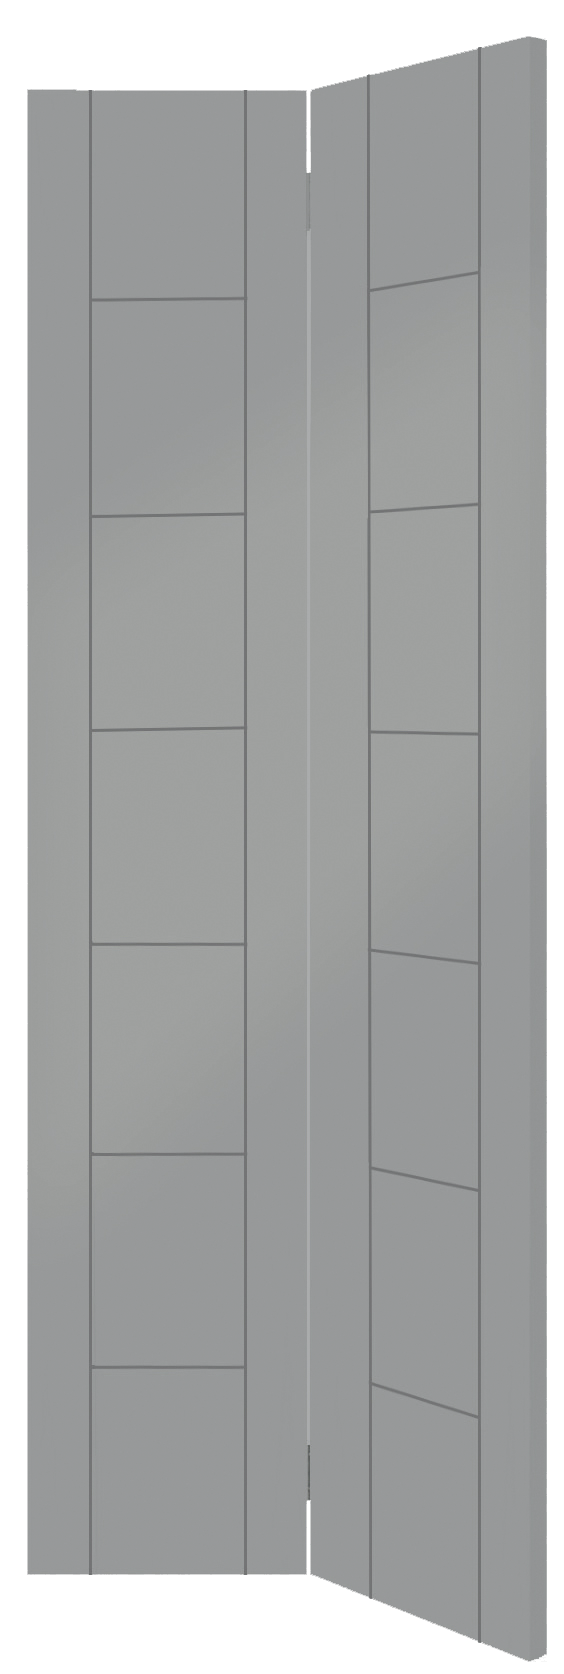 Palermo Internal White Primed Bi-Fold Door – Storm, 1981 x 762 x 35 mm